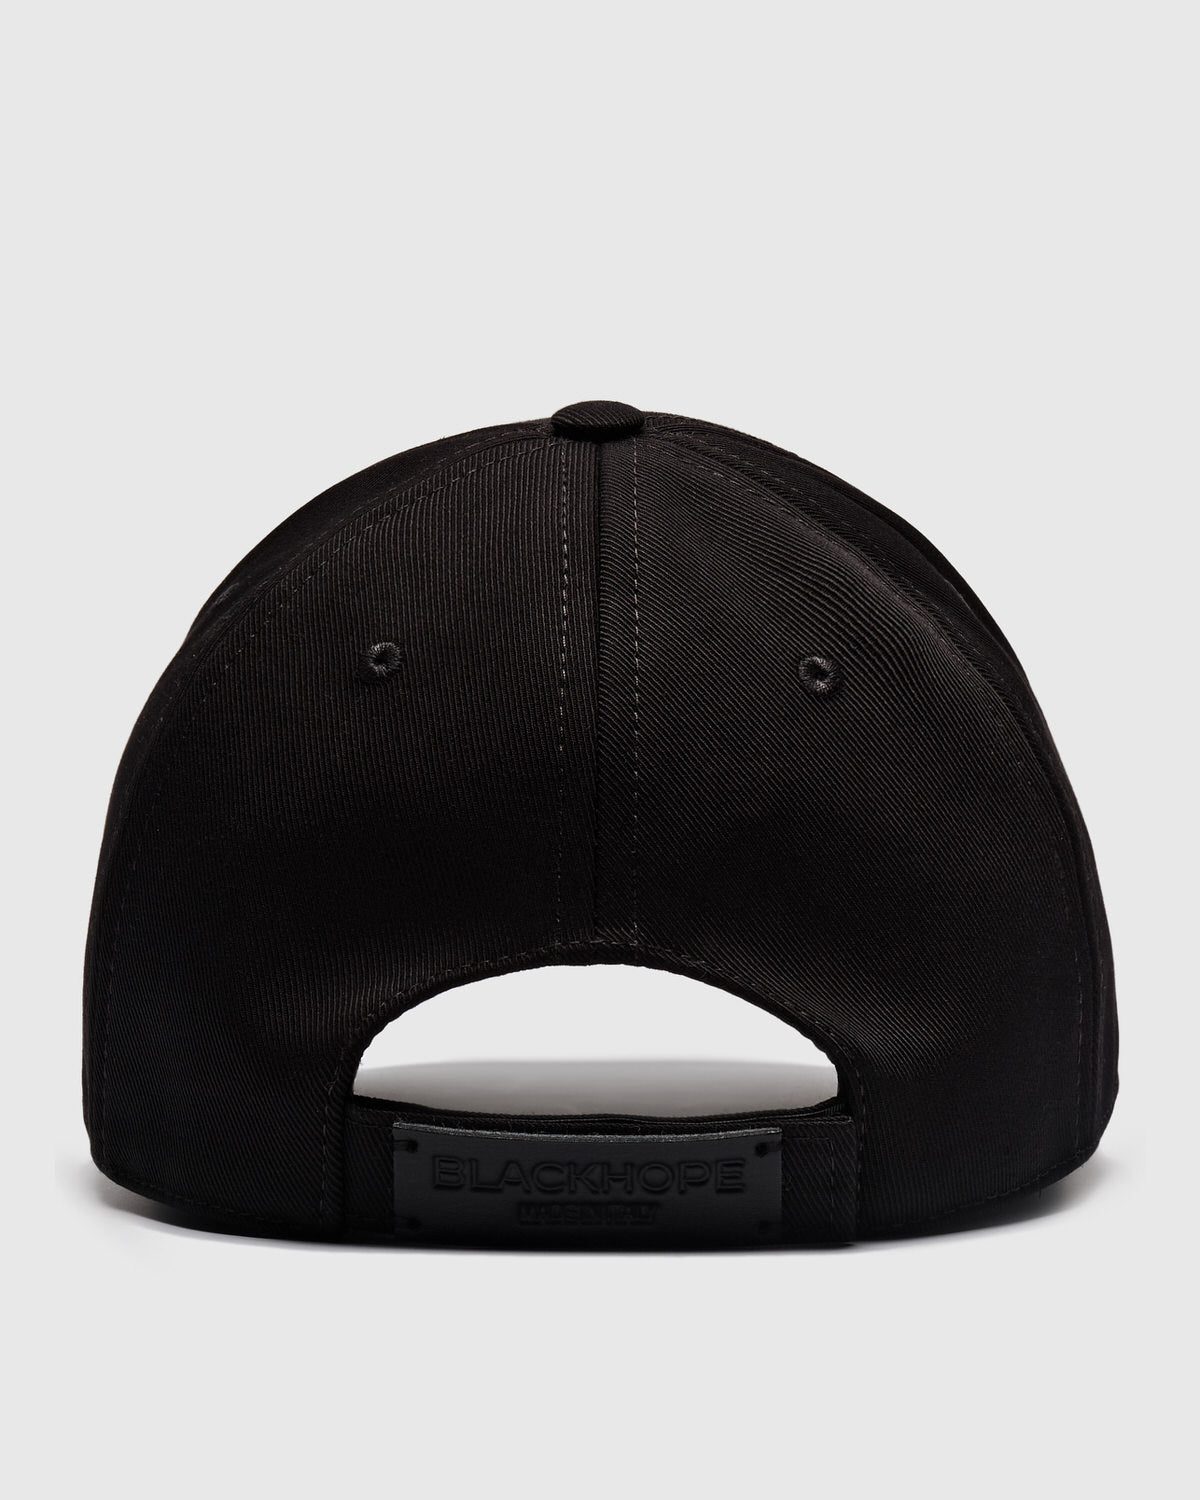 Baseball Hat With Blackhopeitaly Logo